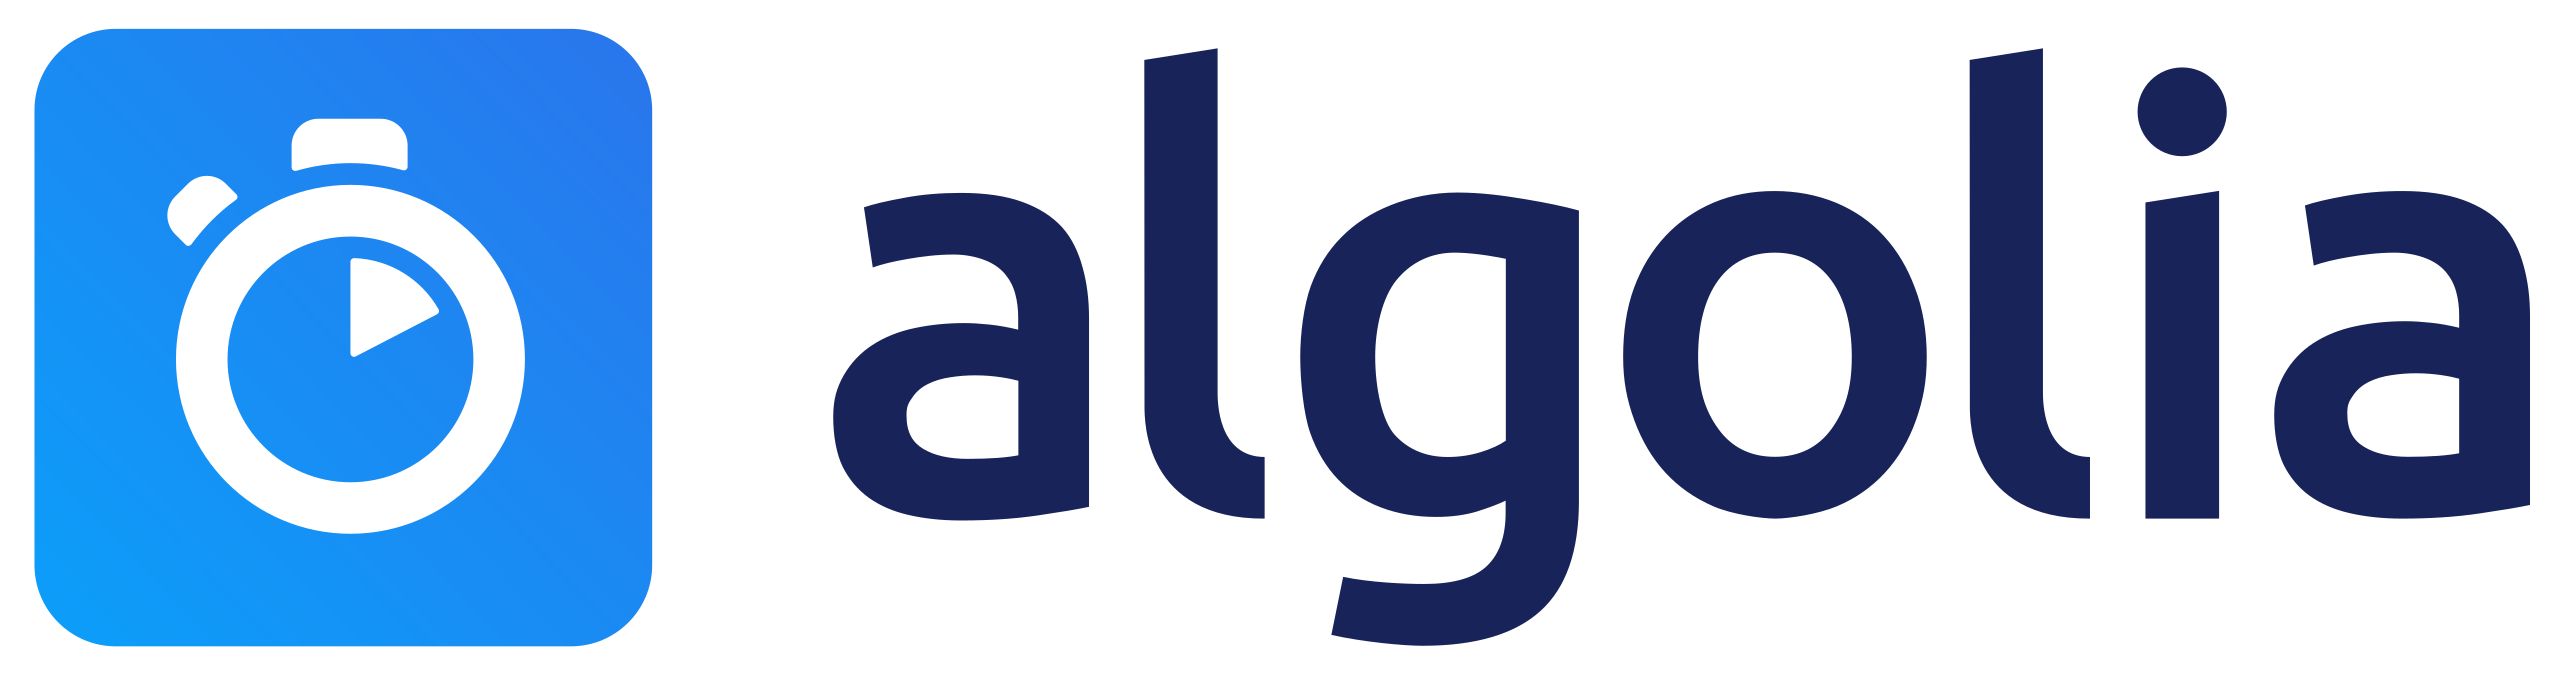 Algolia logo svg